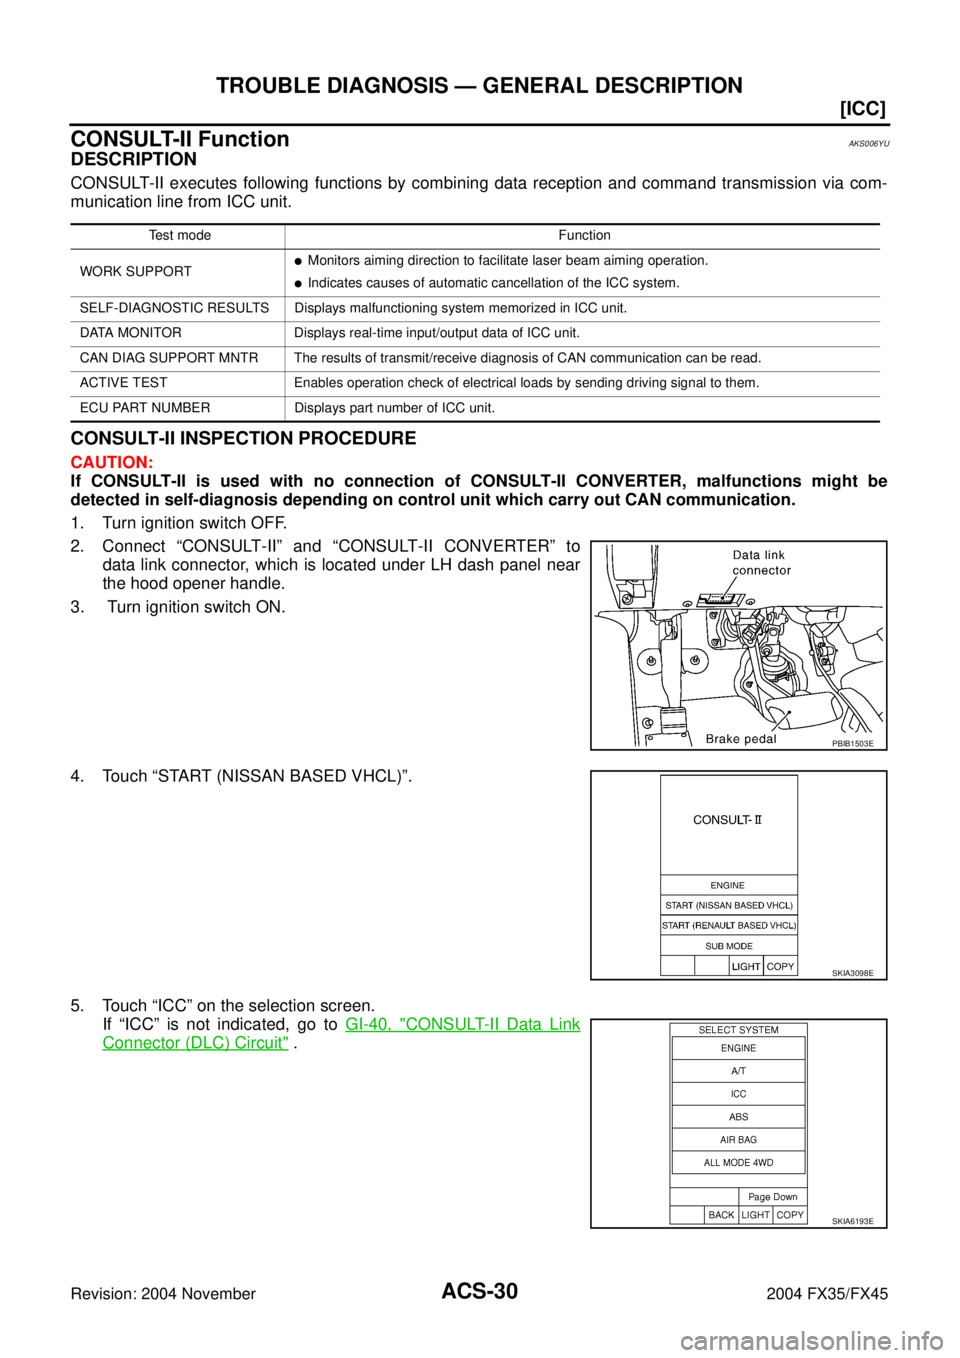 INFINITI FX35 2004  Service Manual ACS-30
[ICC]
TROUBLE DIAGNOSIS — GENERAL DESCRIPTION
Revision: 2004 November 2004 FX35/FX45
CONSULT-II FunctionAKS006YU
DESCRIPTION
CONSULT-II executes following functions by combining data receptio